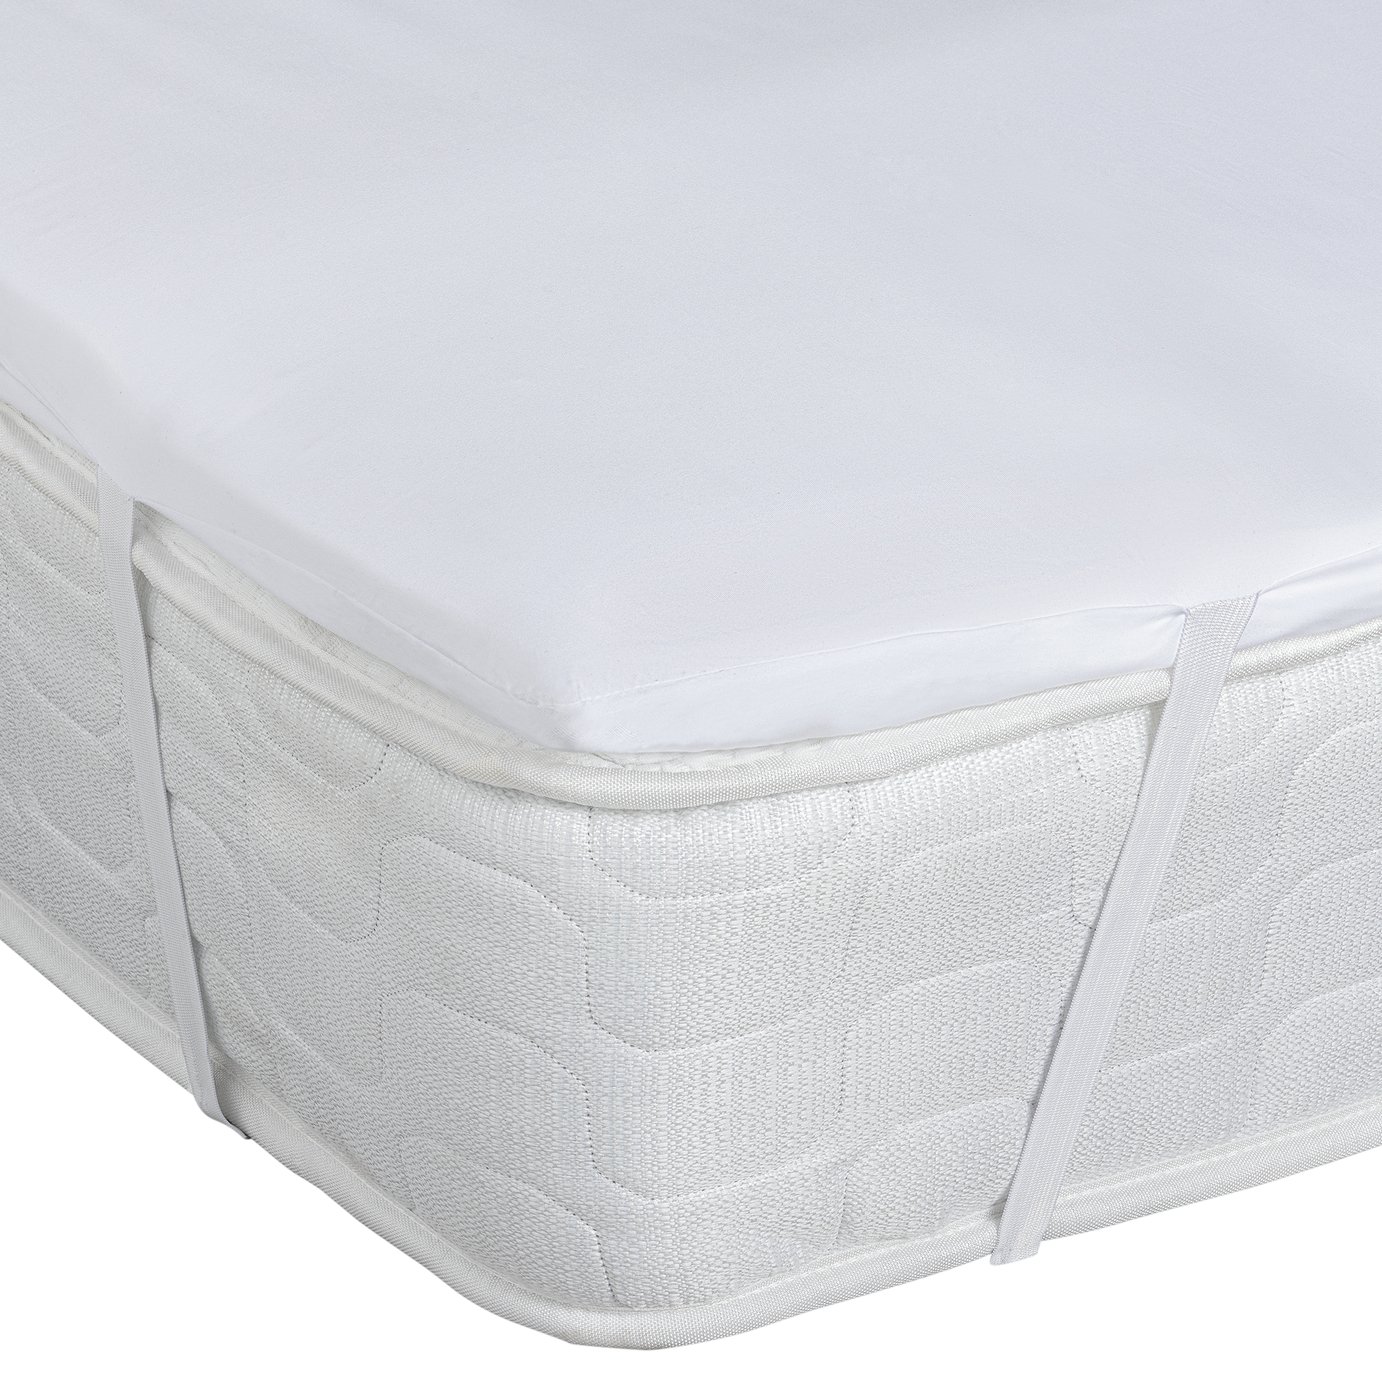 5cm foam mattress topper